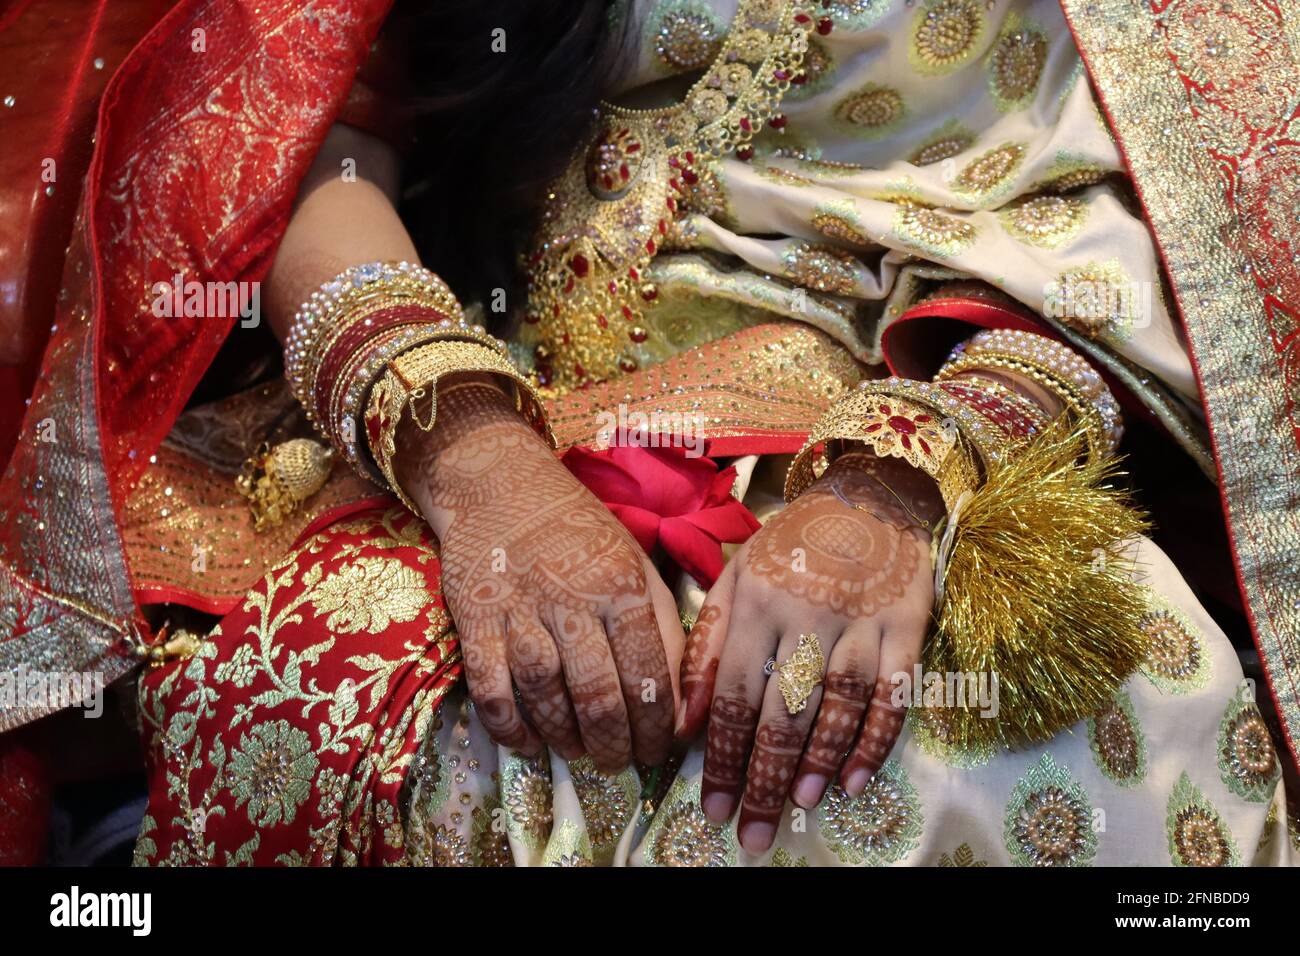 a Bangladeshi bride closeup with wedding ring in finger Stock Photo